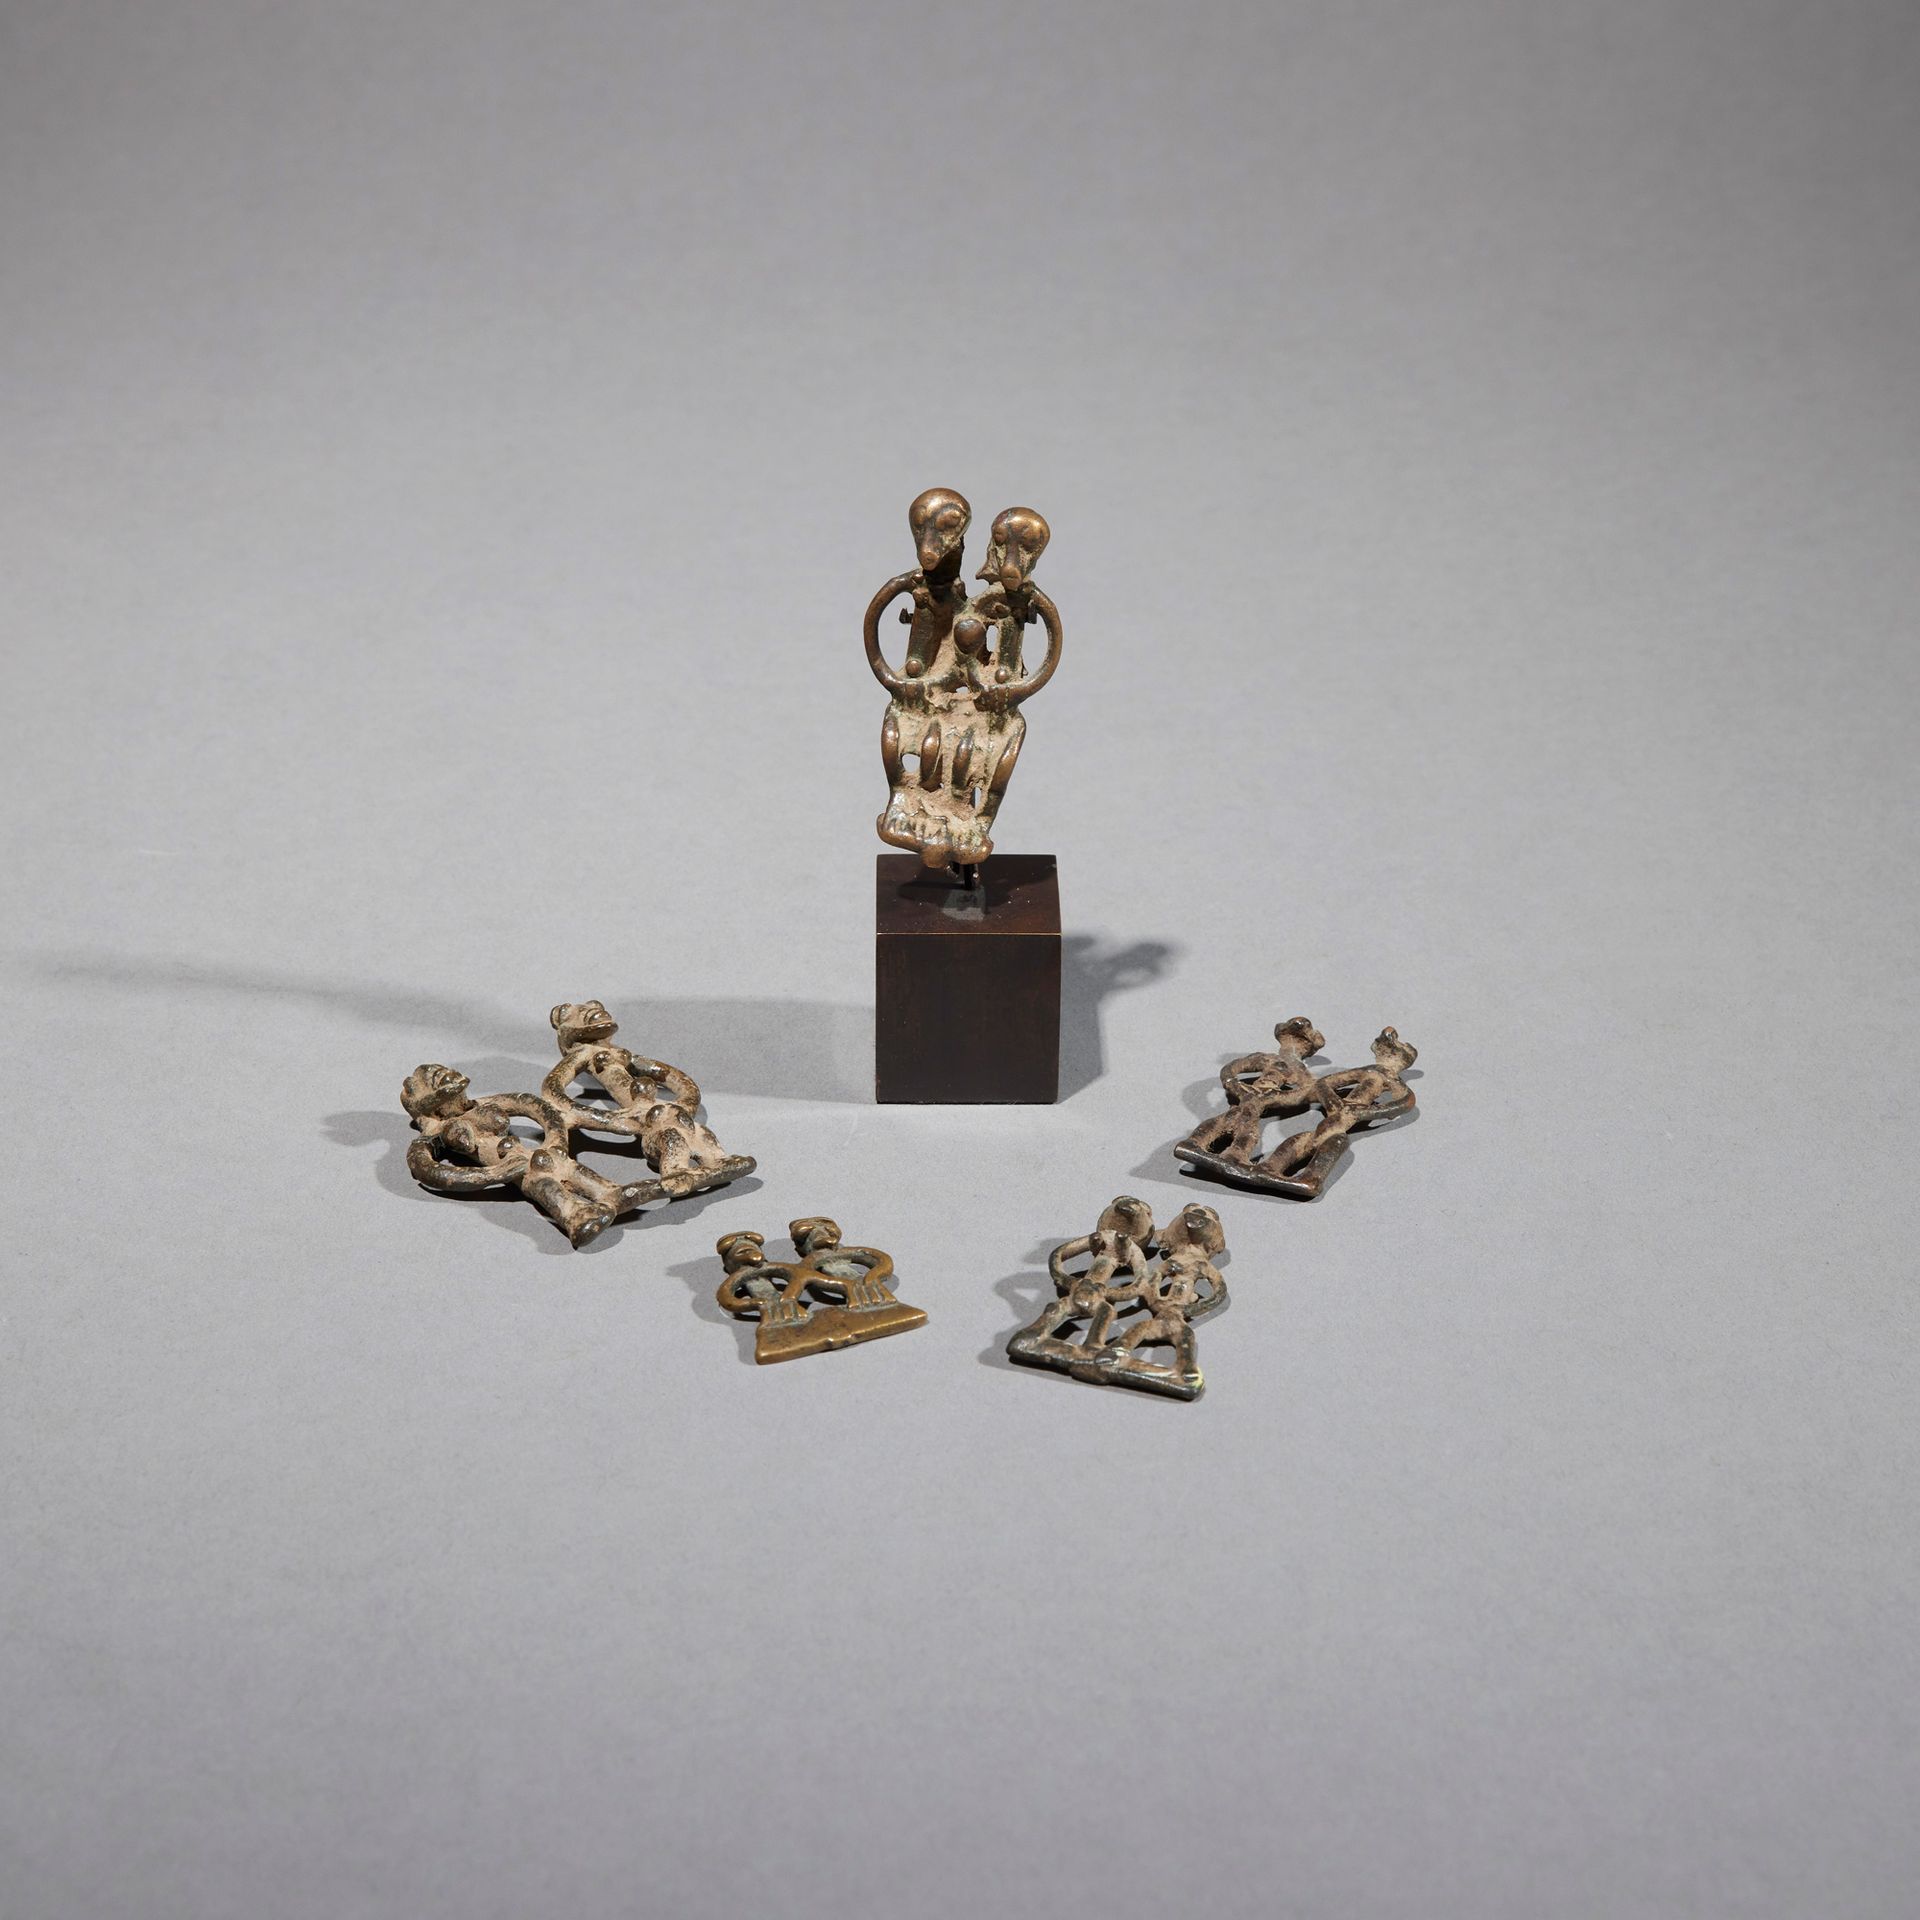 Null 五个塞努弗护身符

象牙海岸

铜质

H.2.8至4.9厘米



一套五个塞努弗铜制护身符，每个都有两个人物。